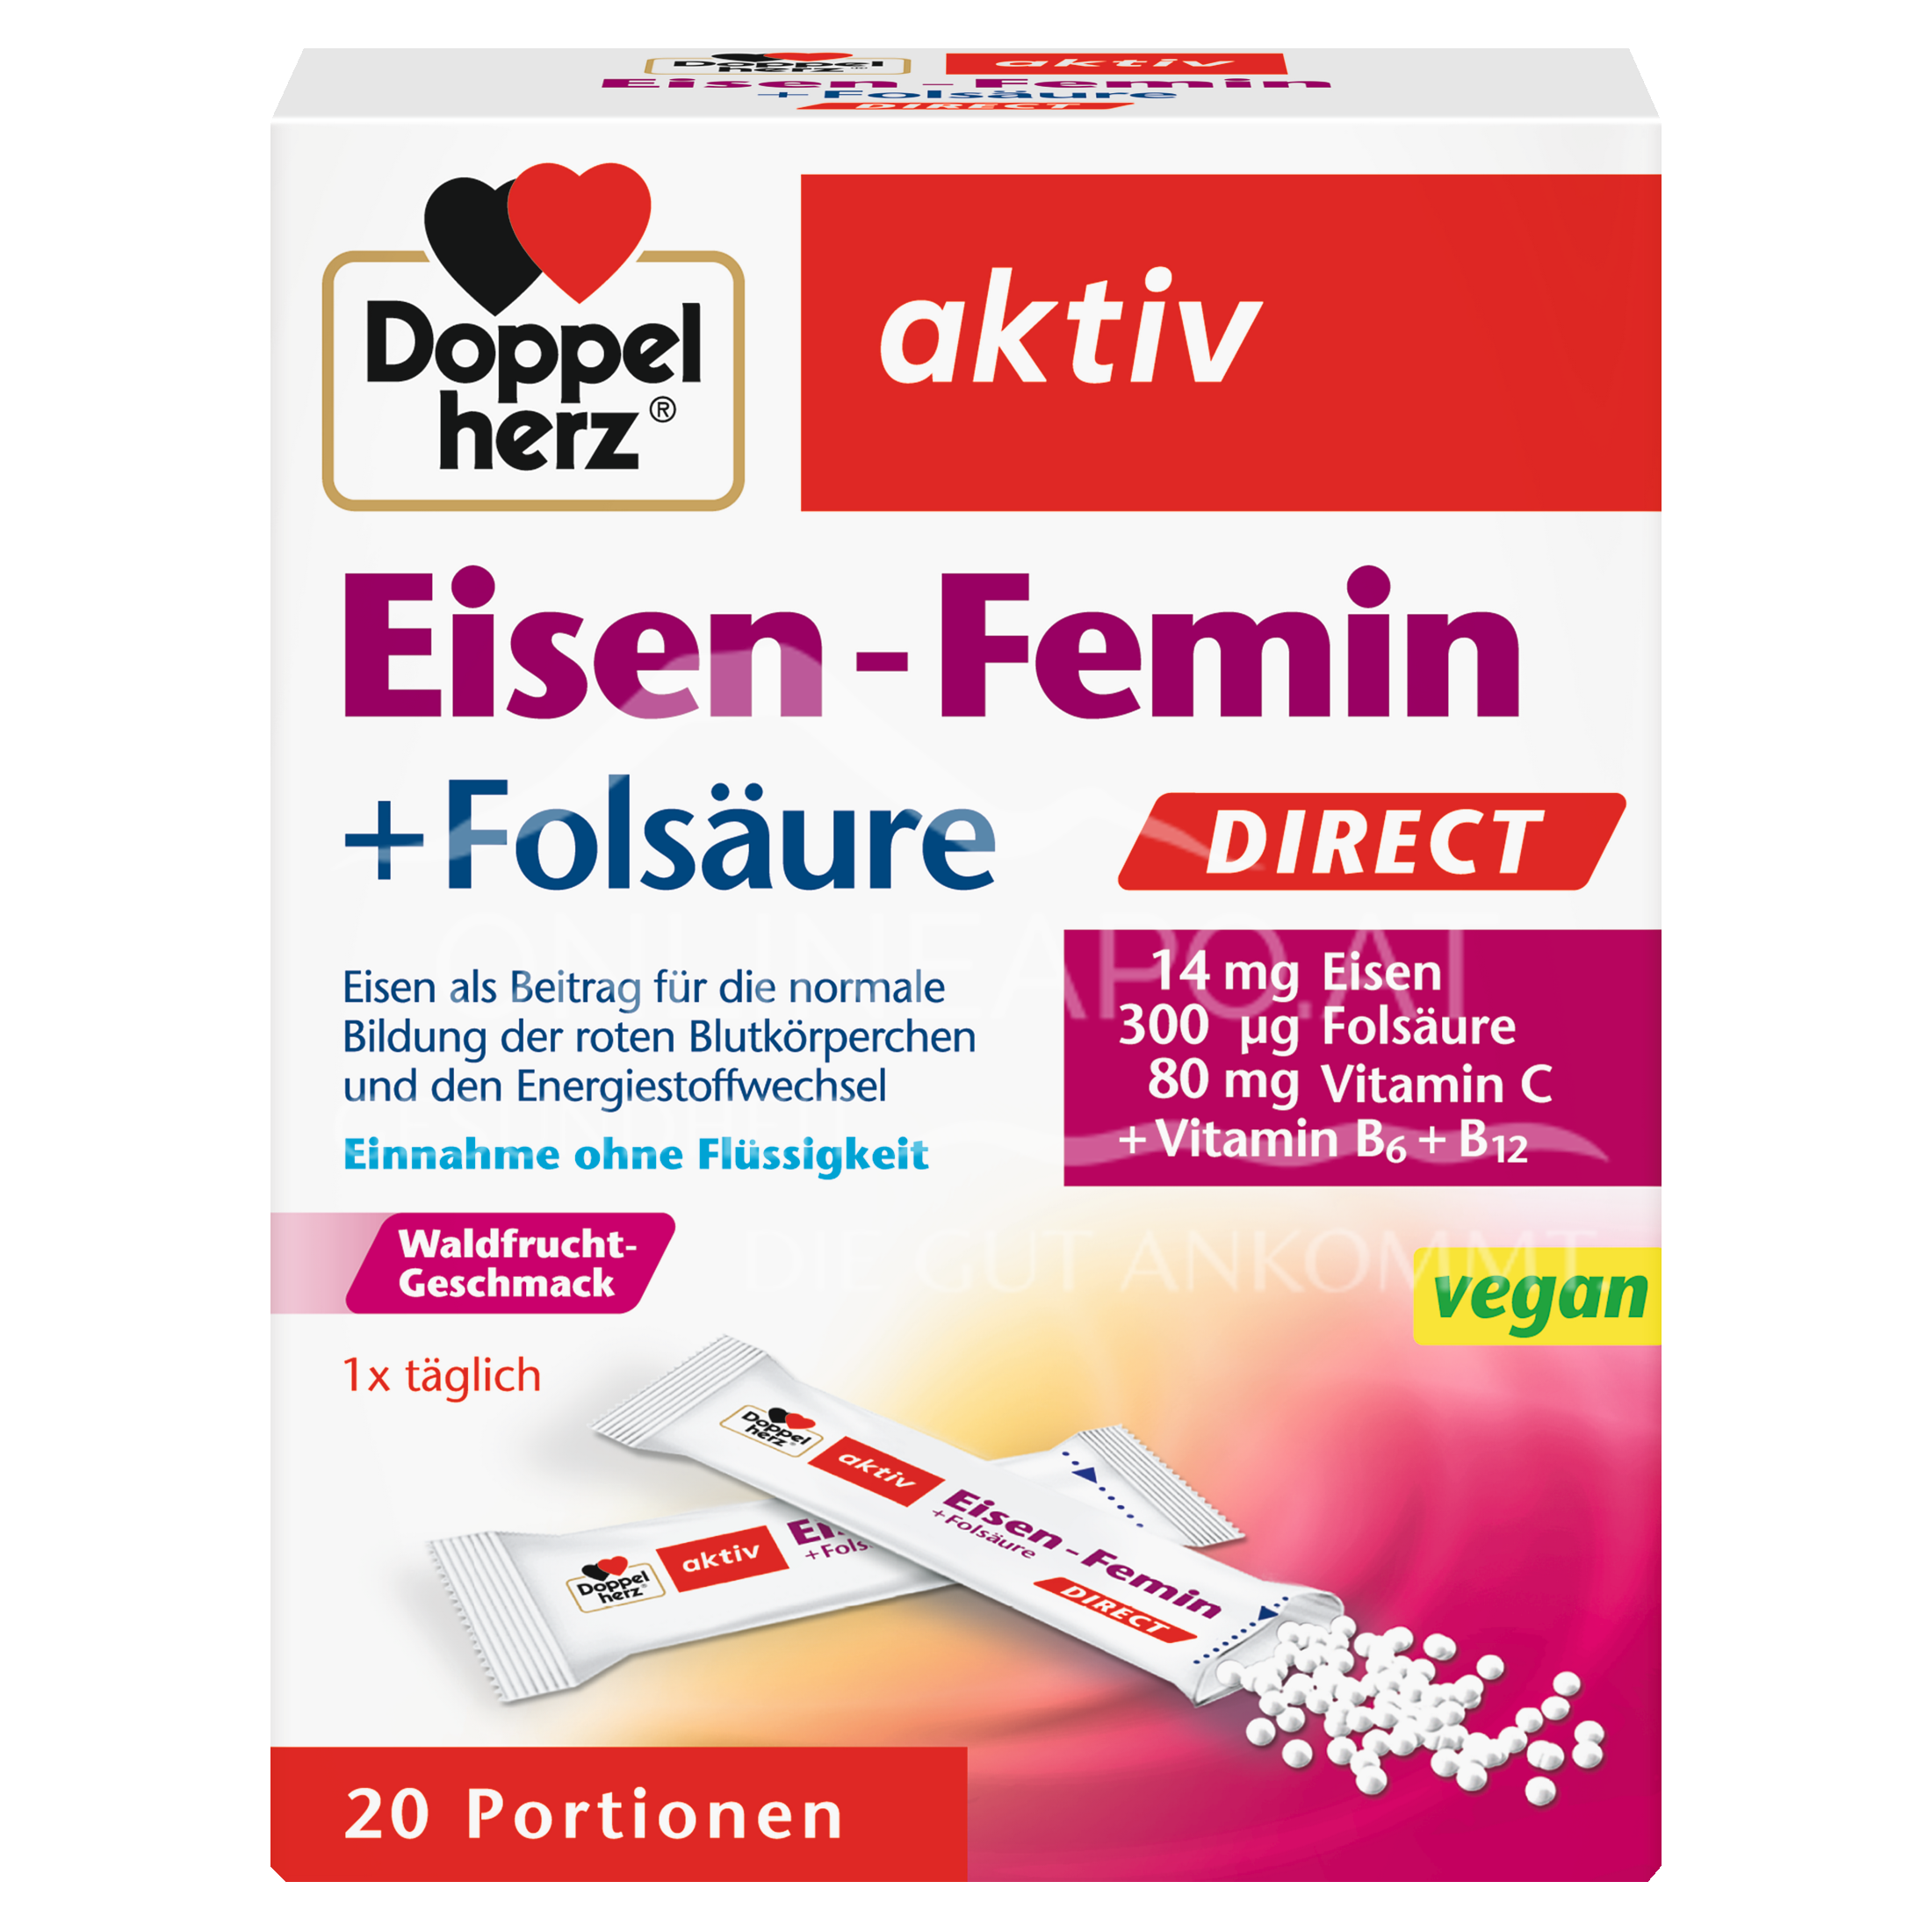 Doppelherz aktiv Eisen-Femin + Folsäure DIRECT Sticks